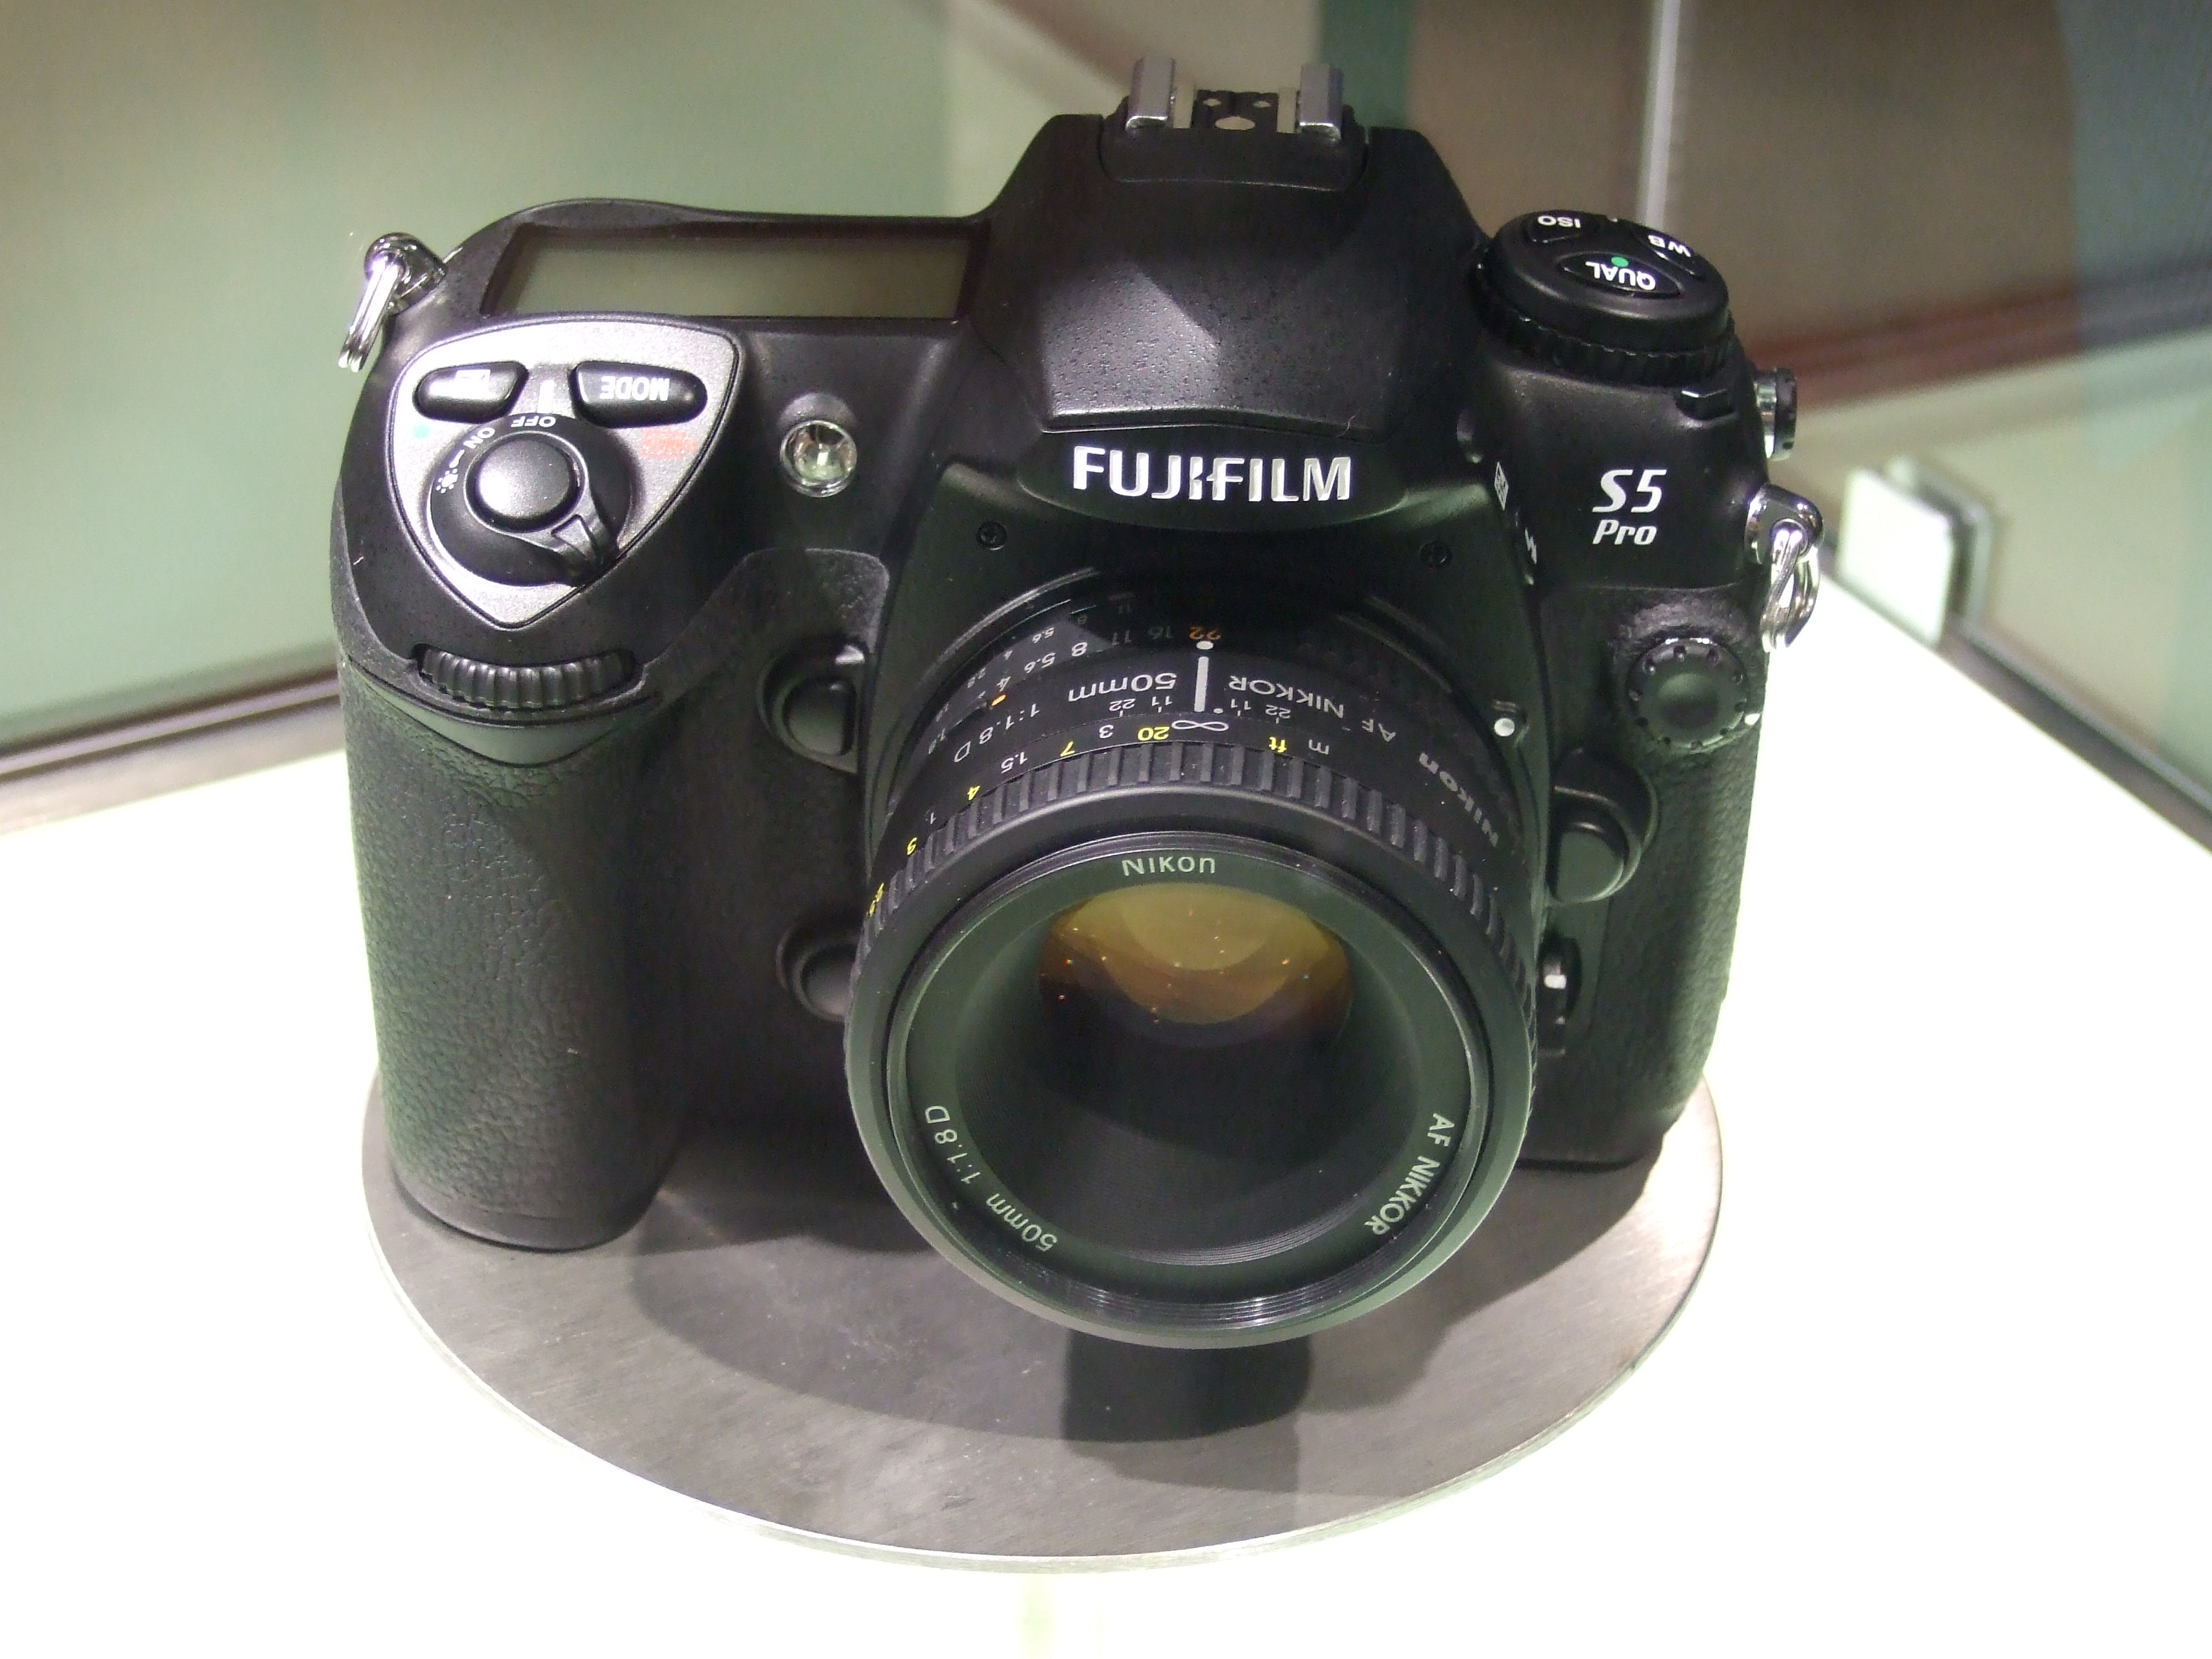 Fujifilm Finepix F20 Review - PhotographyBLOGPhotography Blog